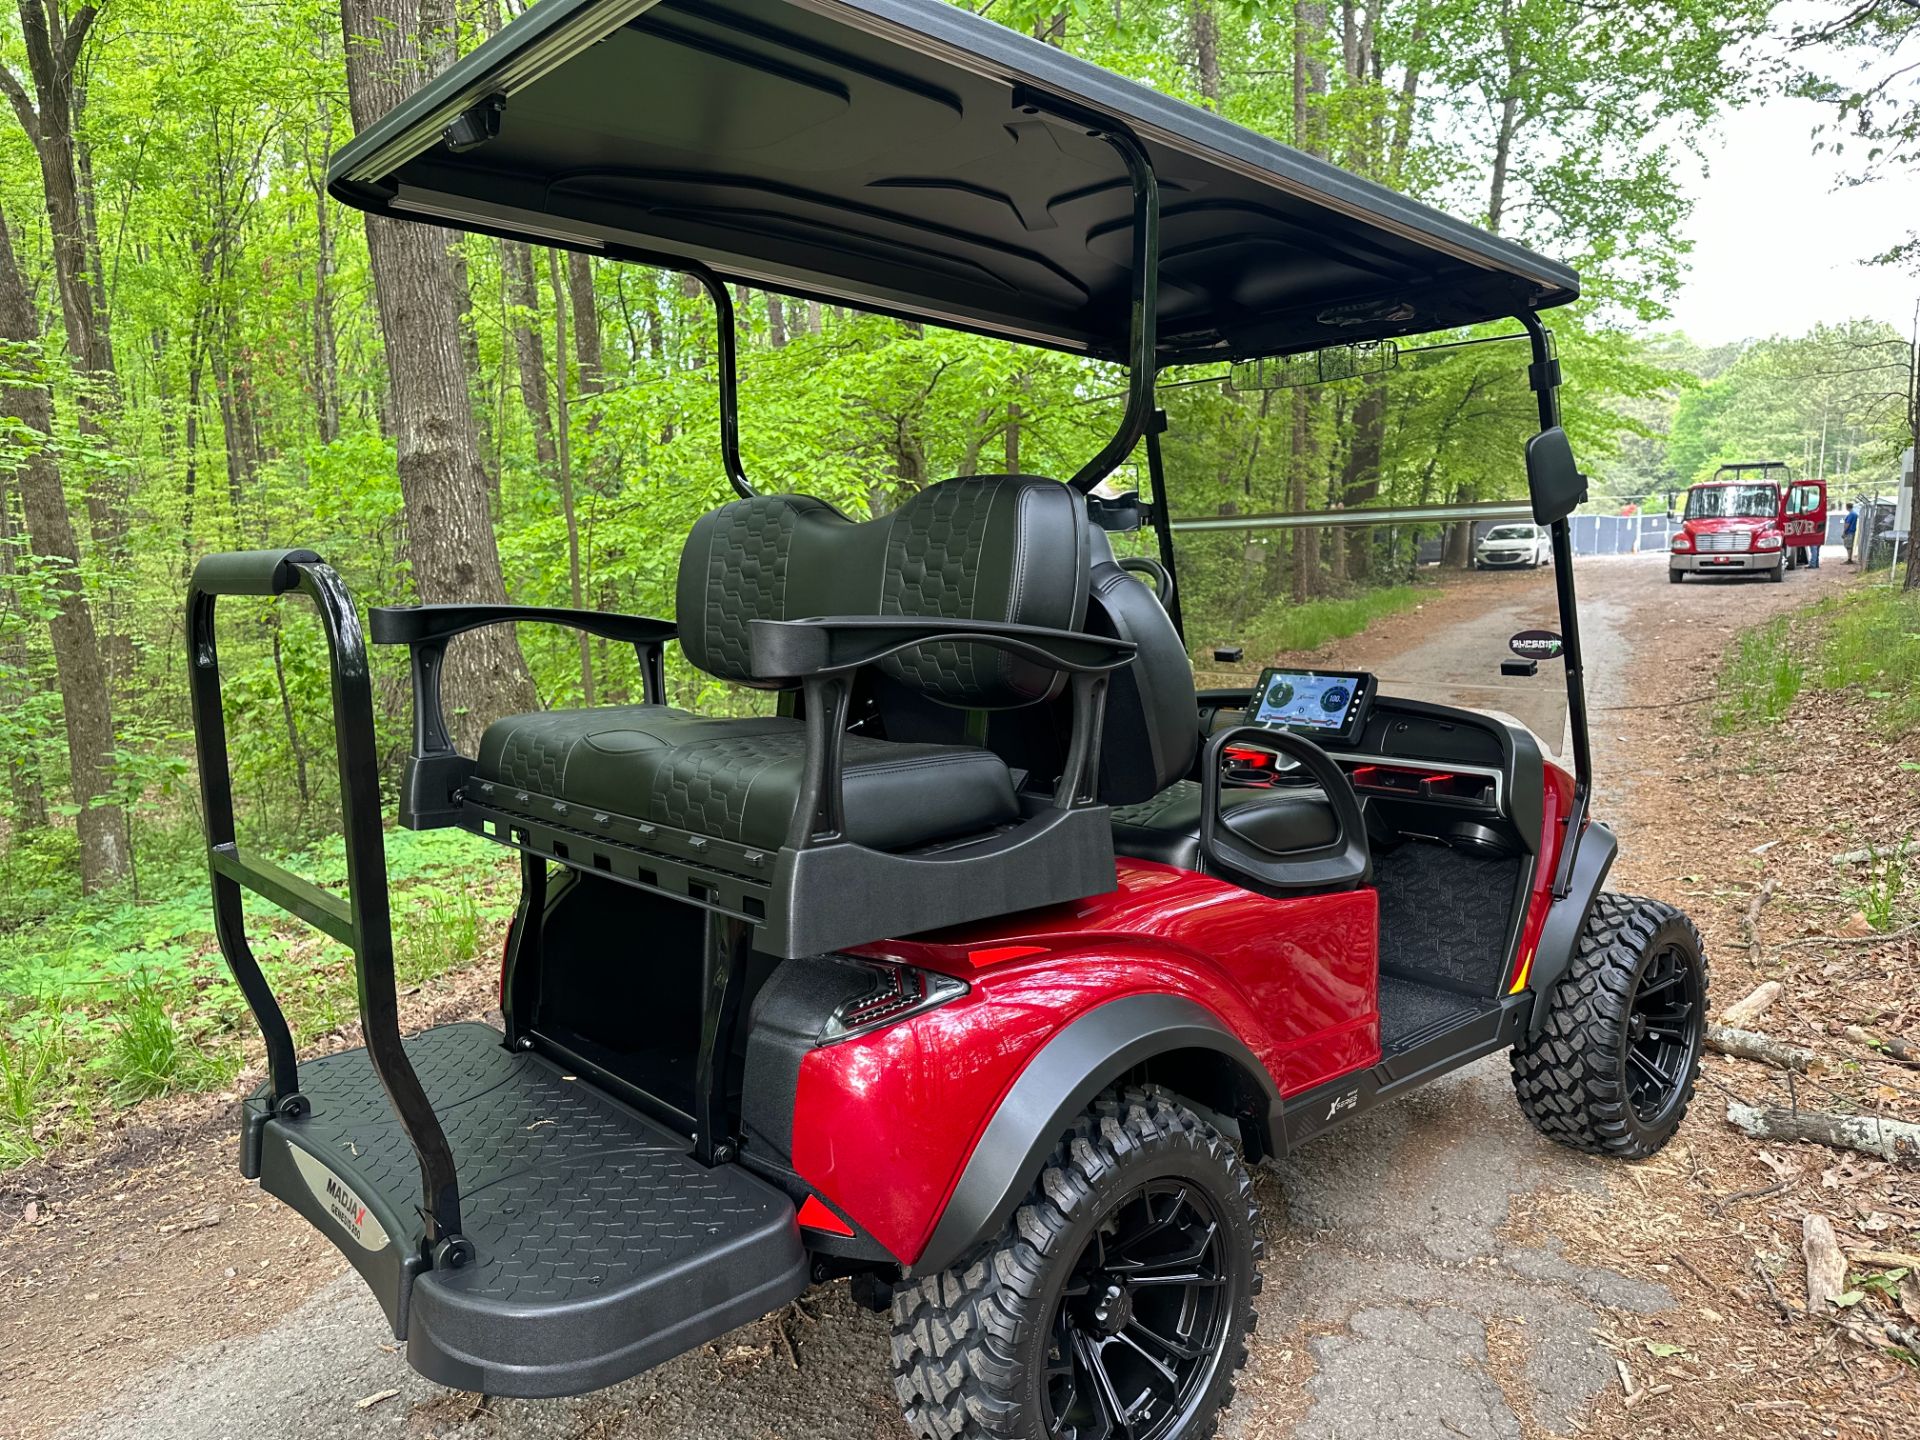 2024 Madjax gen 2 x series lithium golf cart in Woodstock, Georgia - Photo 4